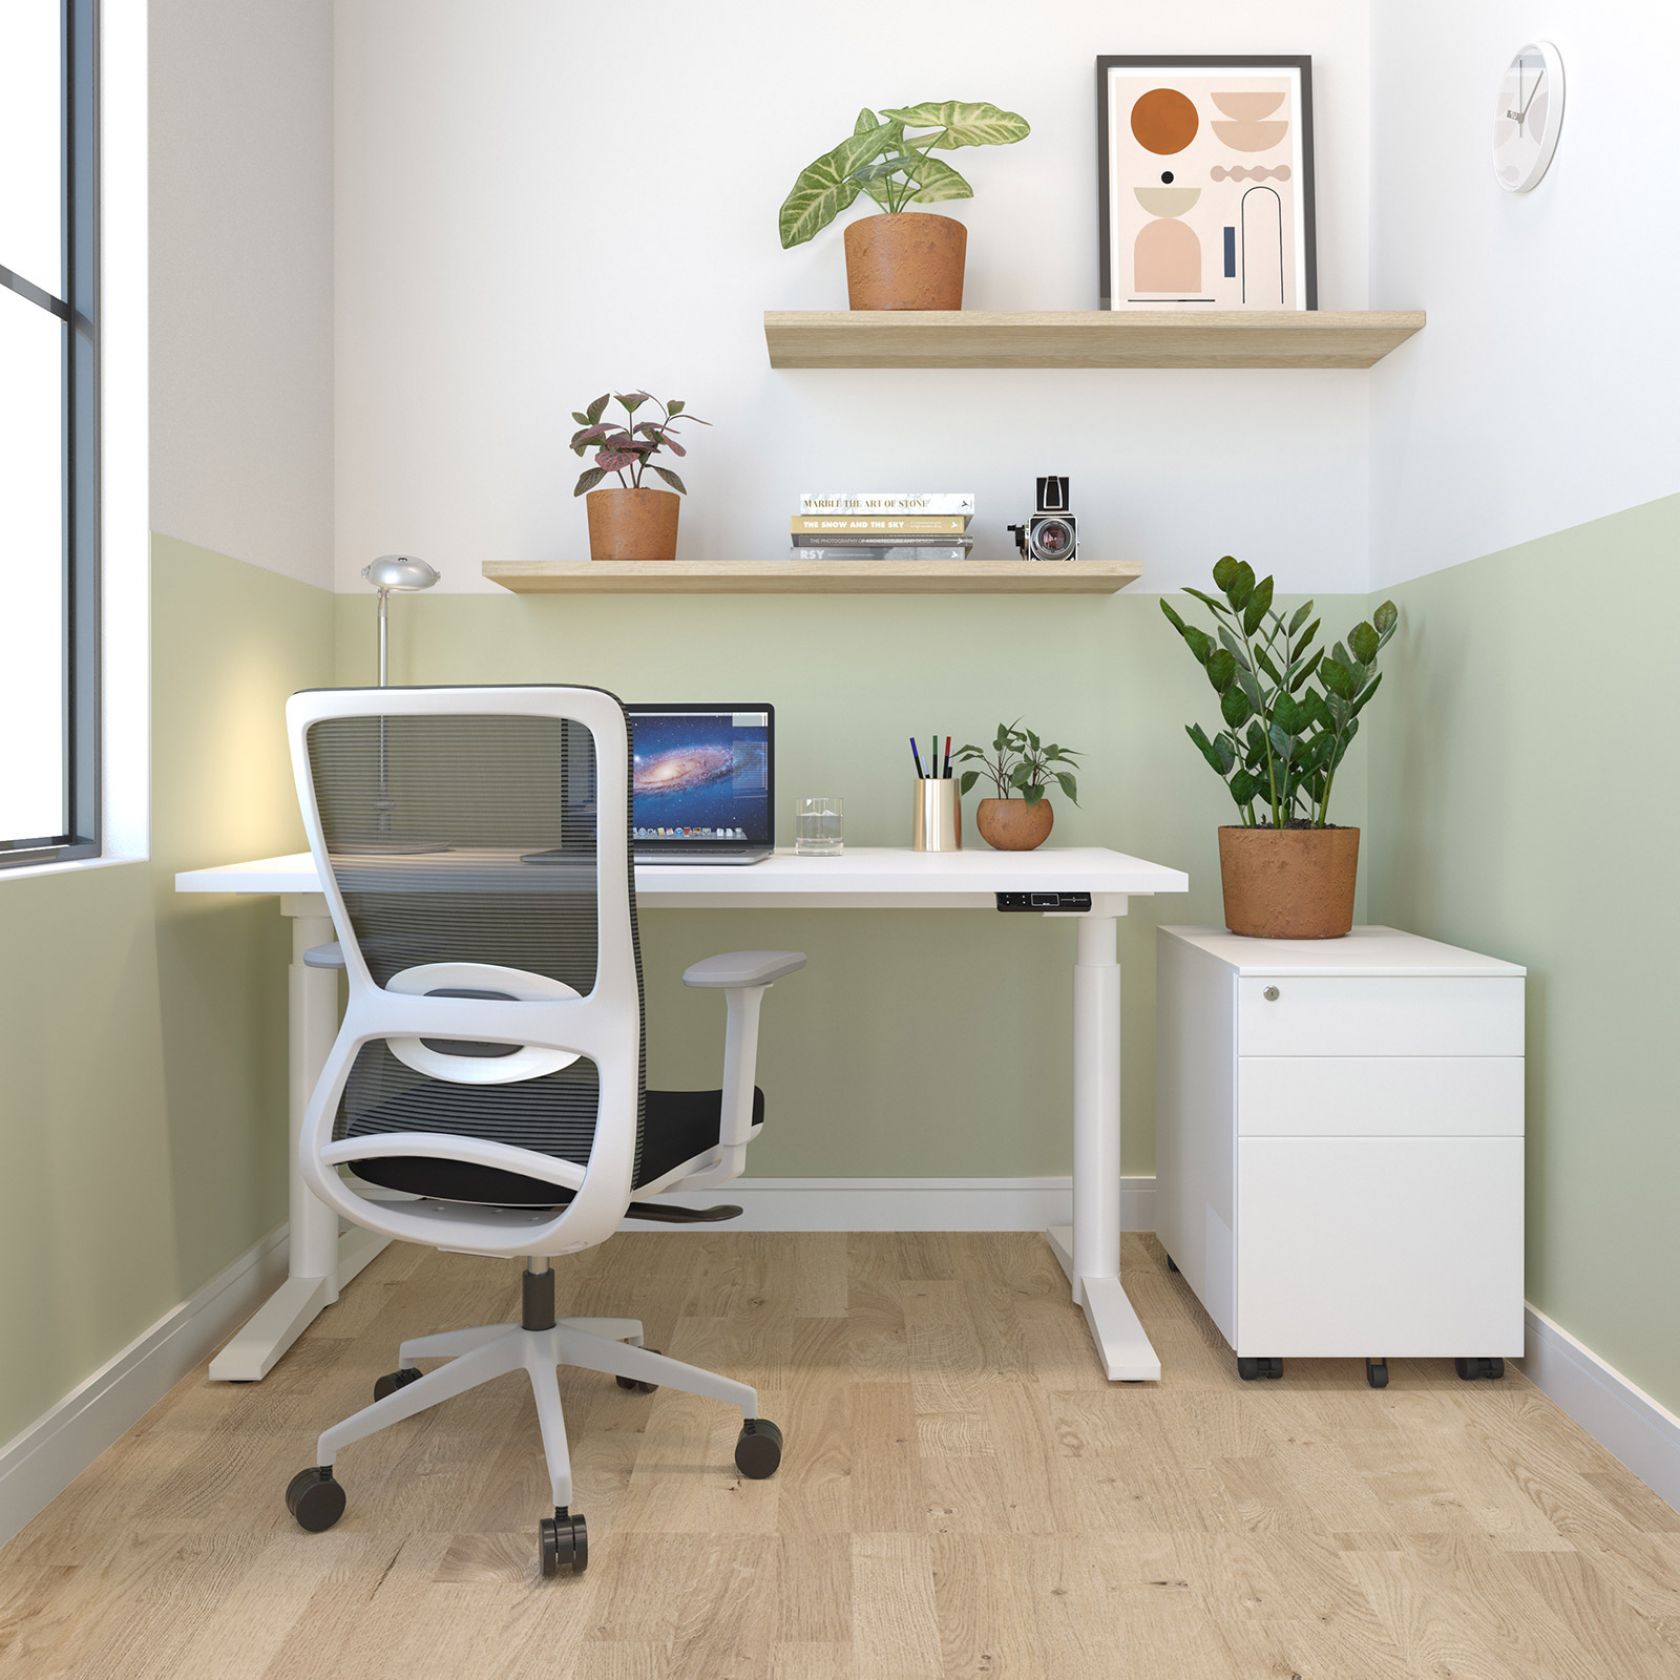 schiavello-dash-chair-krossi-desk-home-office-furniture-nook.jpg